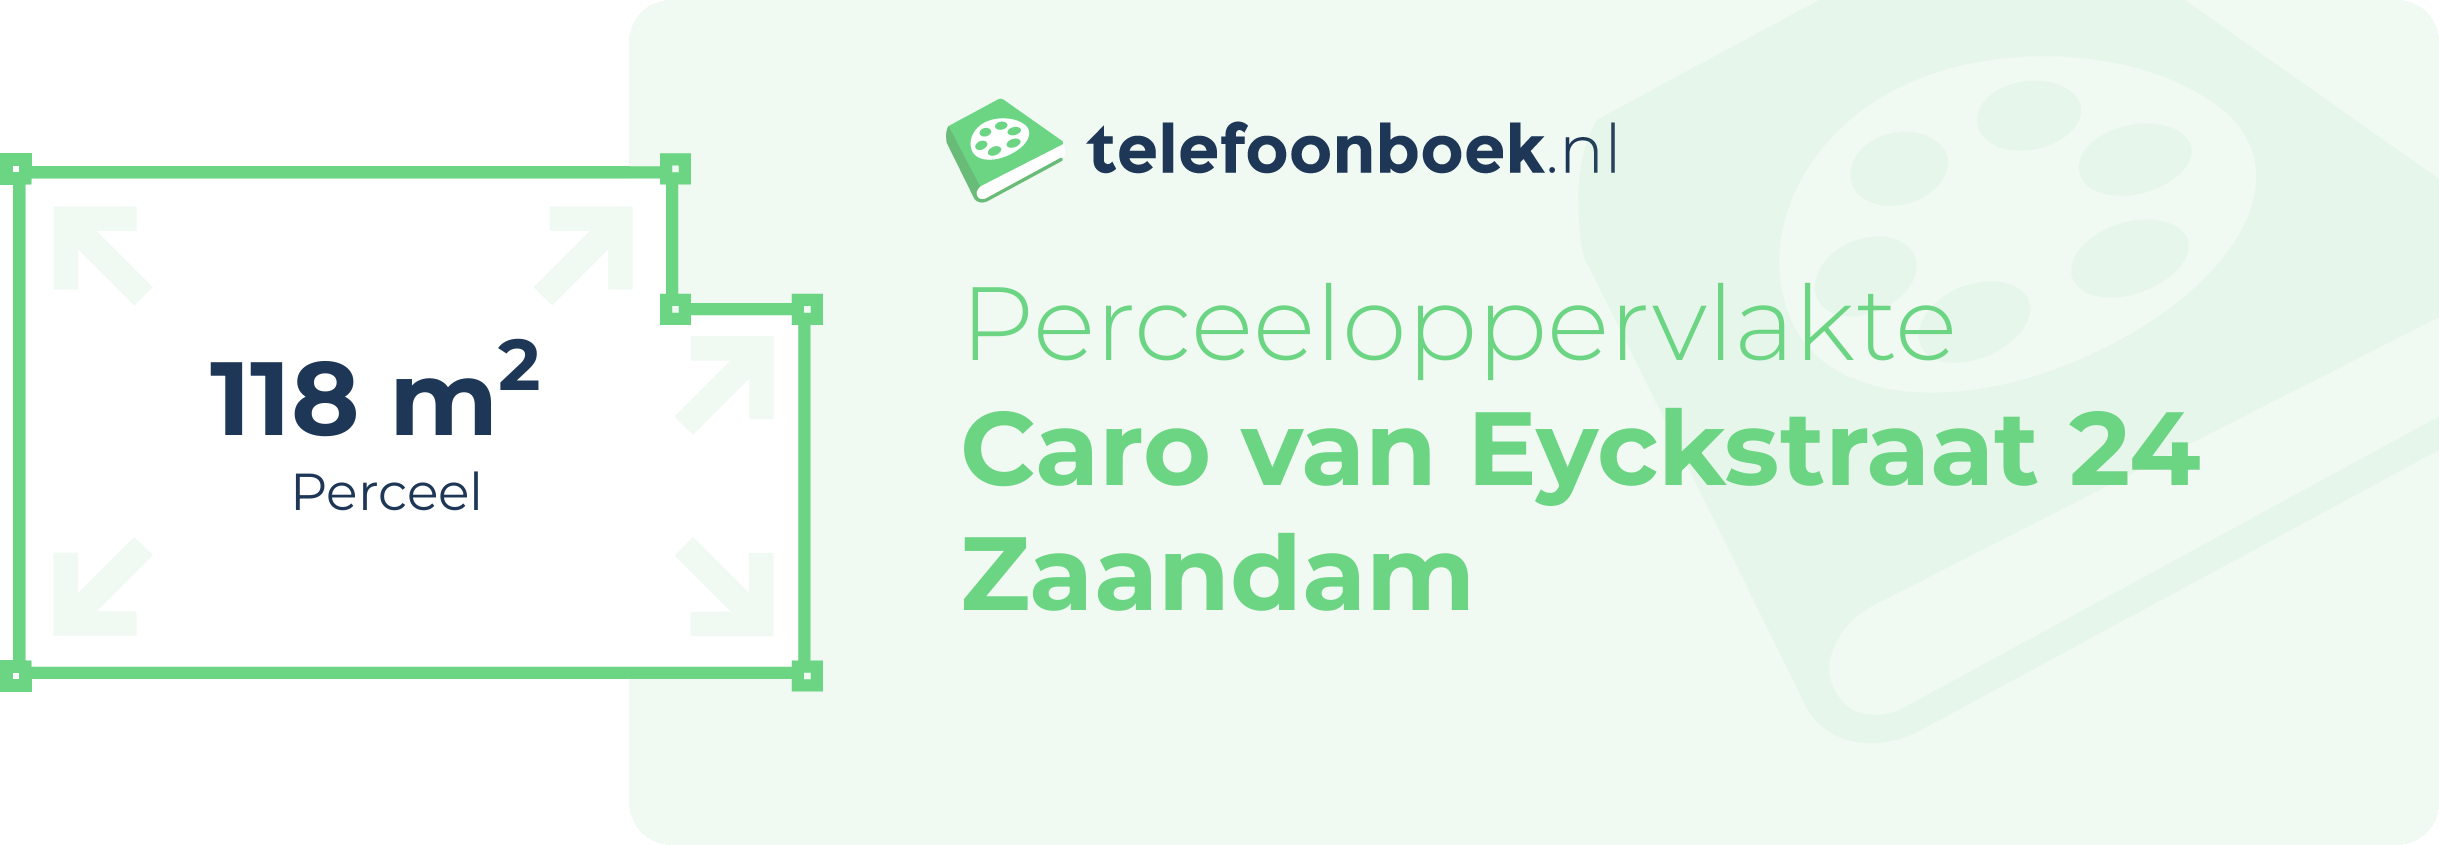 Perceeloppervlakte Caro Van Eyckstraat 24 Zaandam